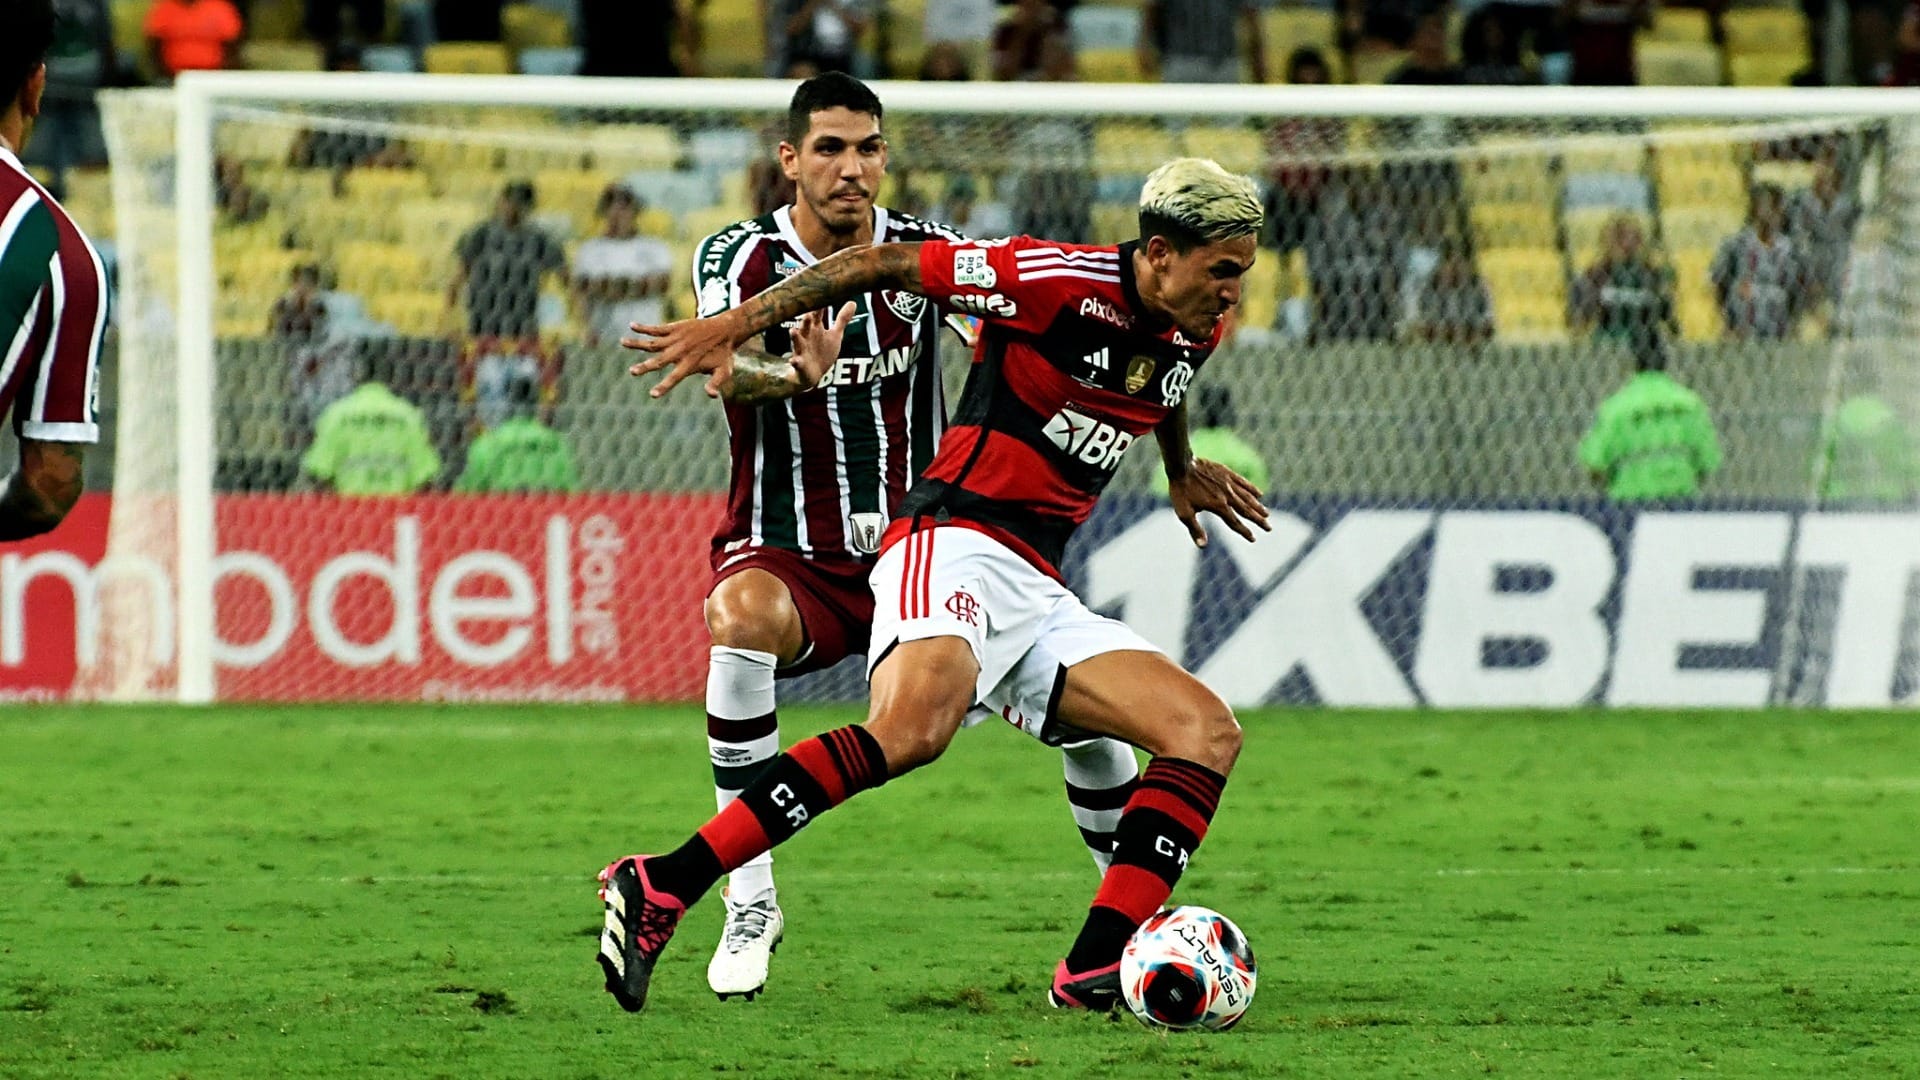 Assistir Fluminense x Flamengo ao vivo 09/04/2023 HD online -  !